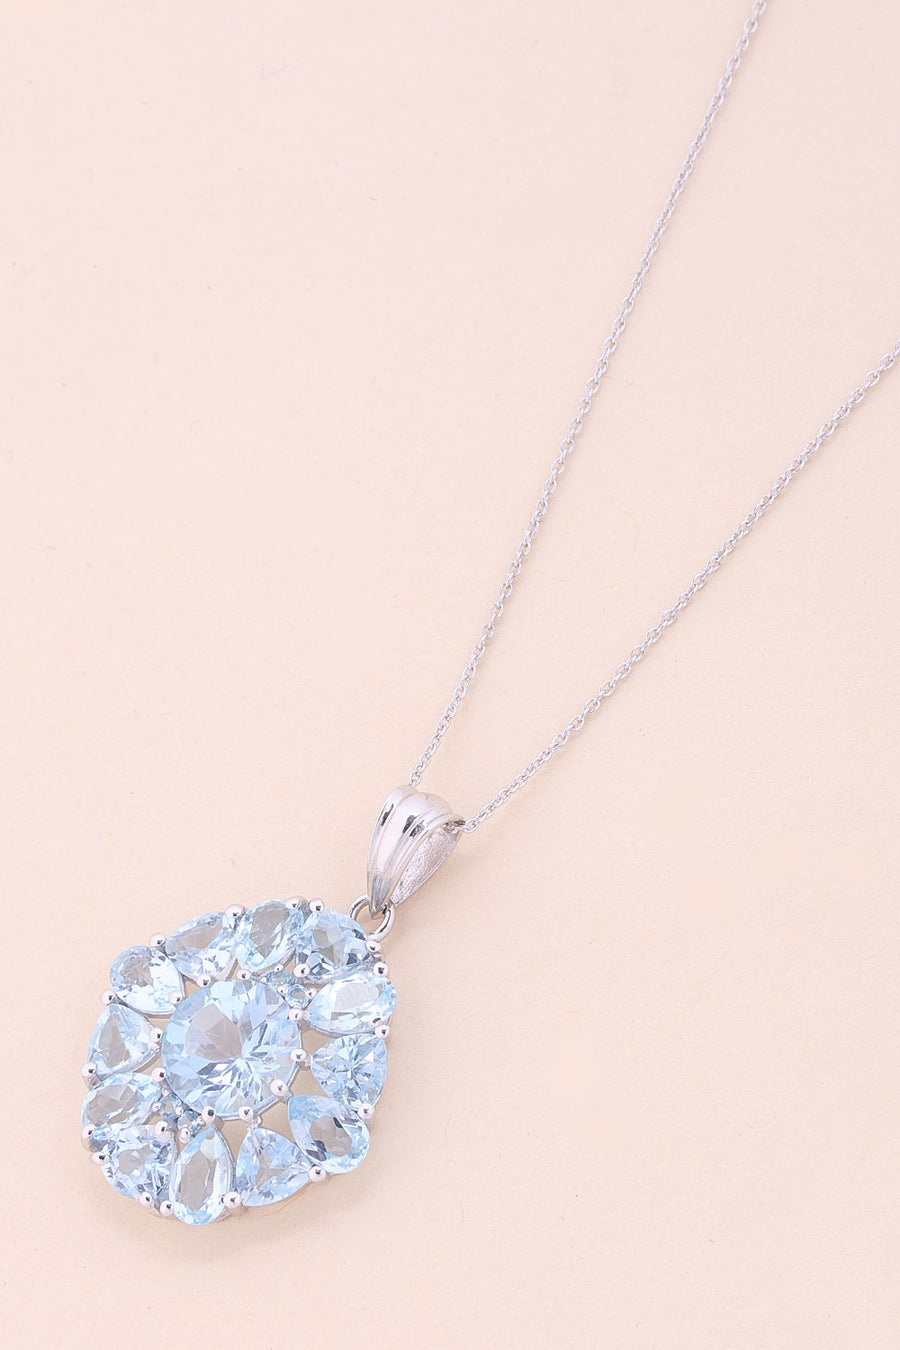 Blue Topaz Silver Necklace Pendant Chain-Avishya